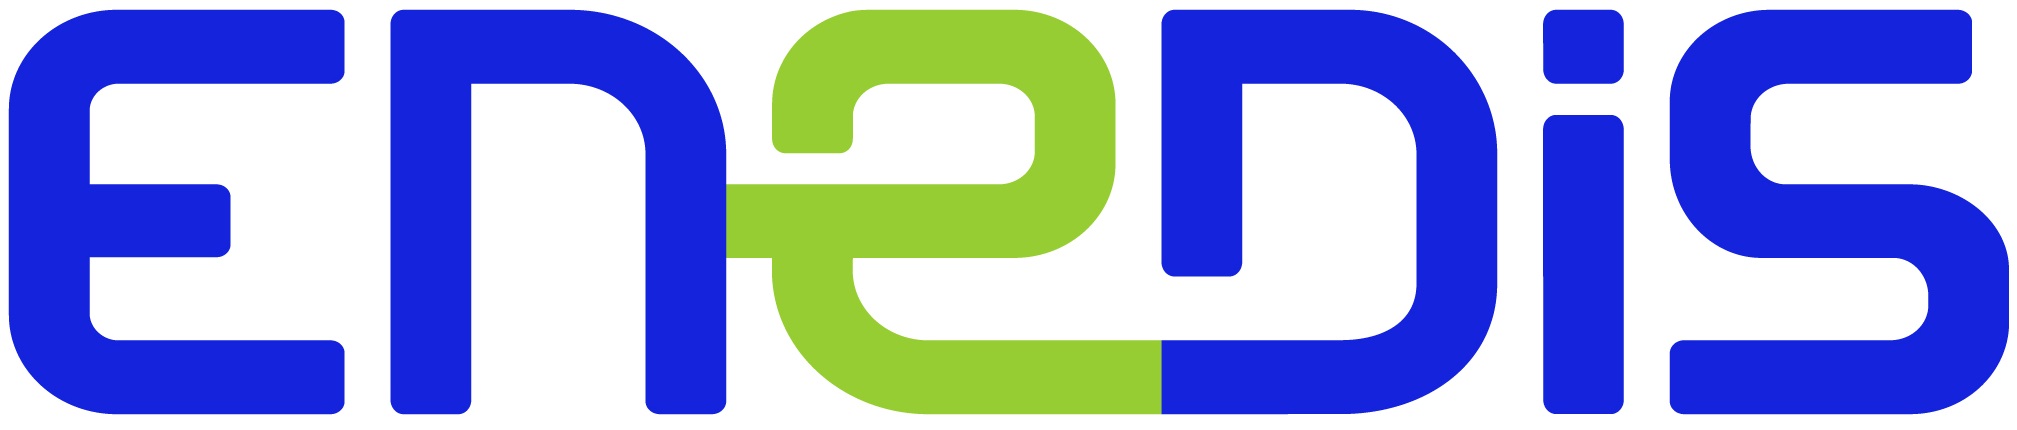 Le logo de Enedis